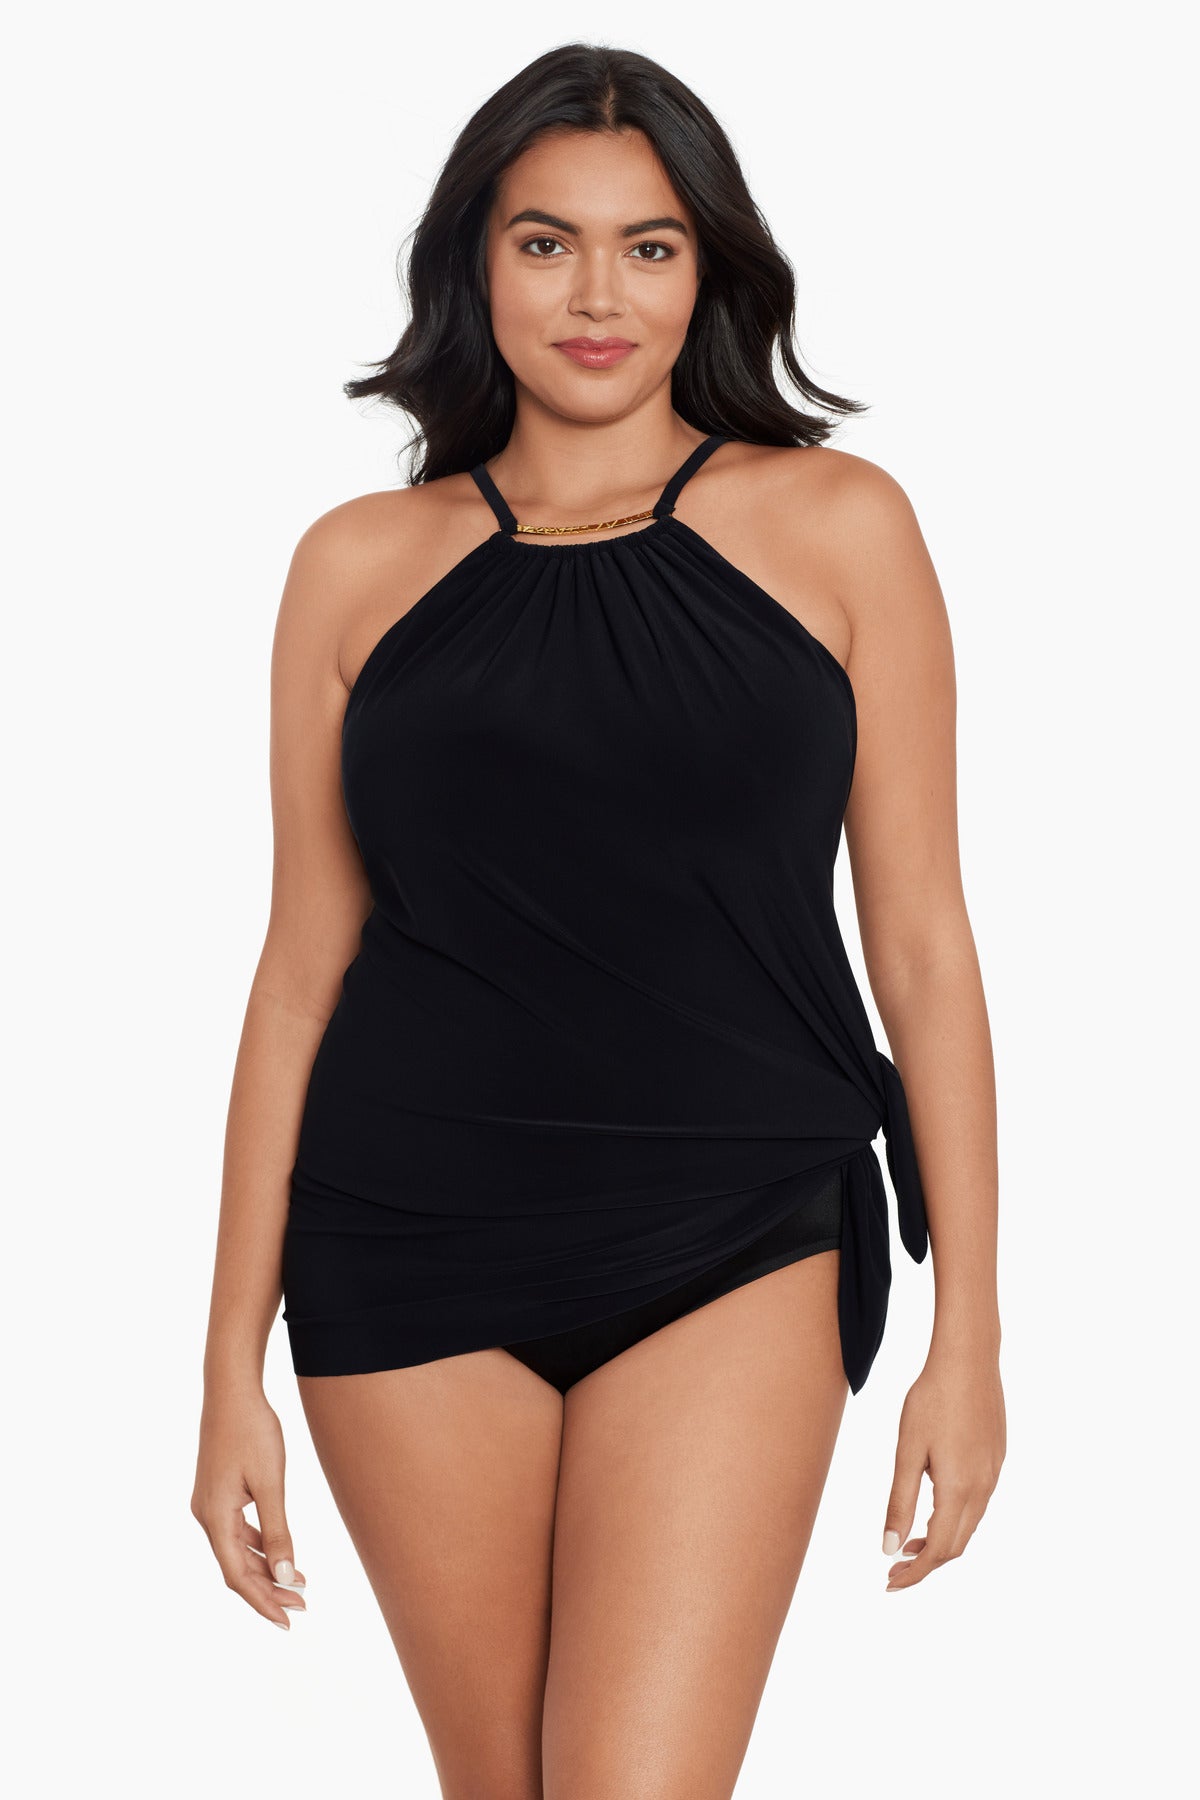 Swimsuits For All Women's Plus Size Bandeau Blouson Tankini Top